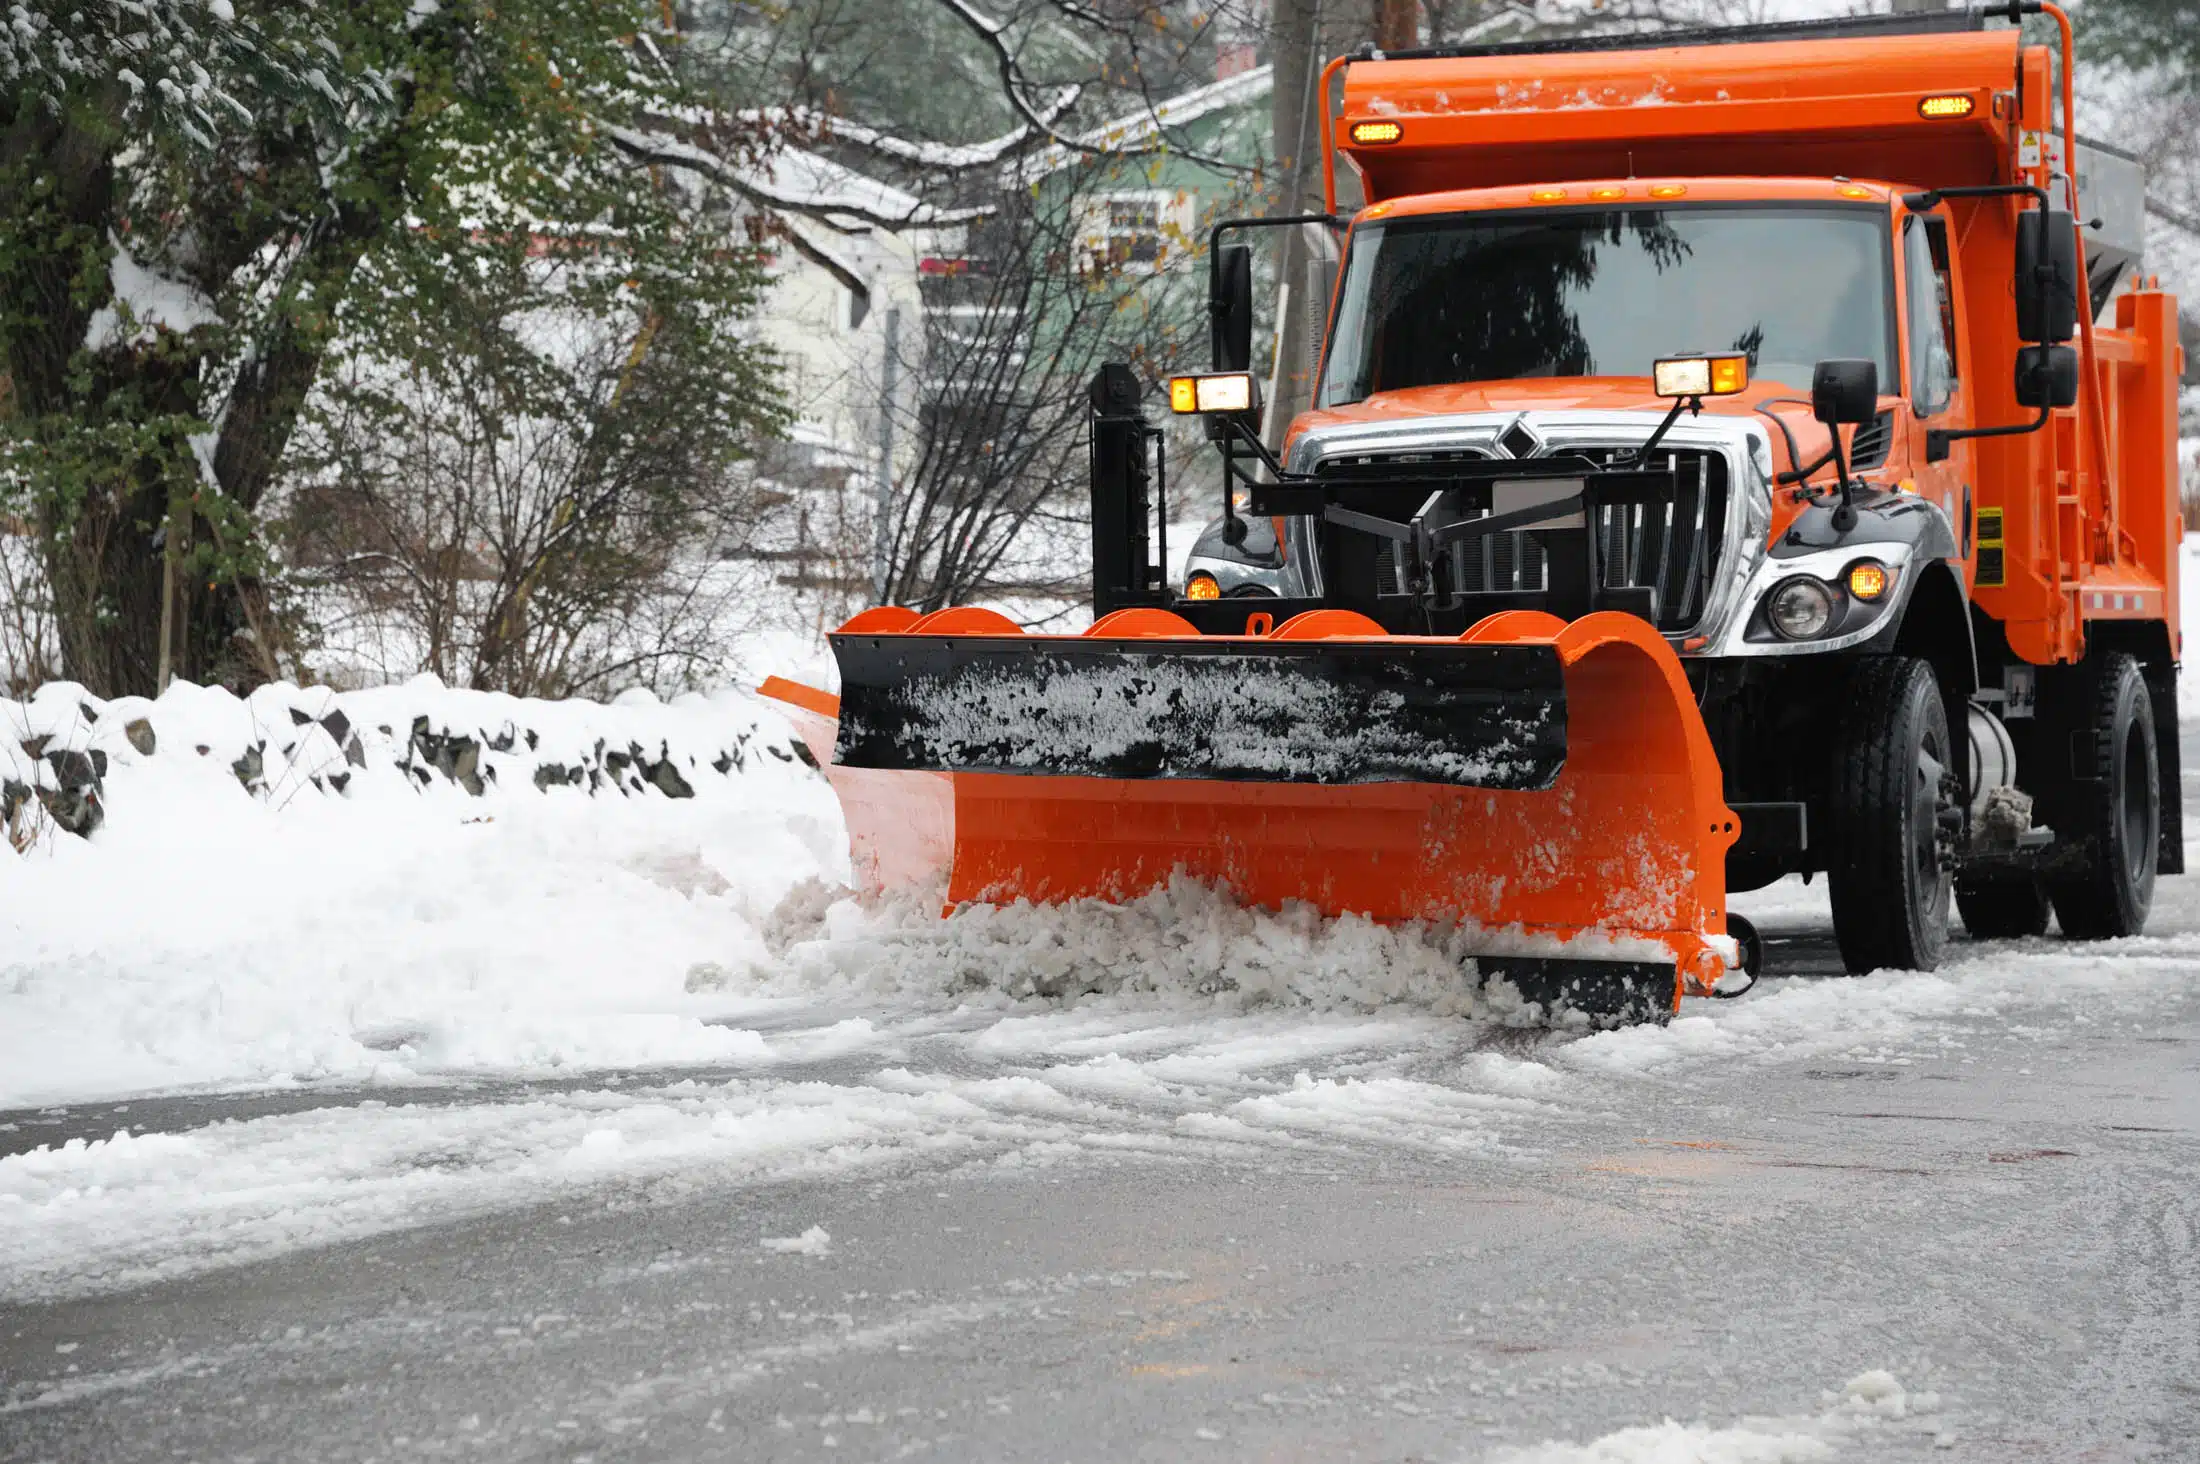 Snow plow plowing snow